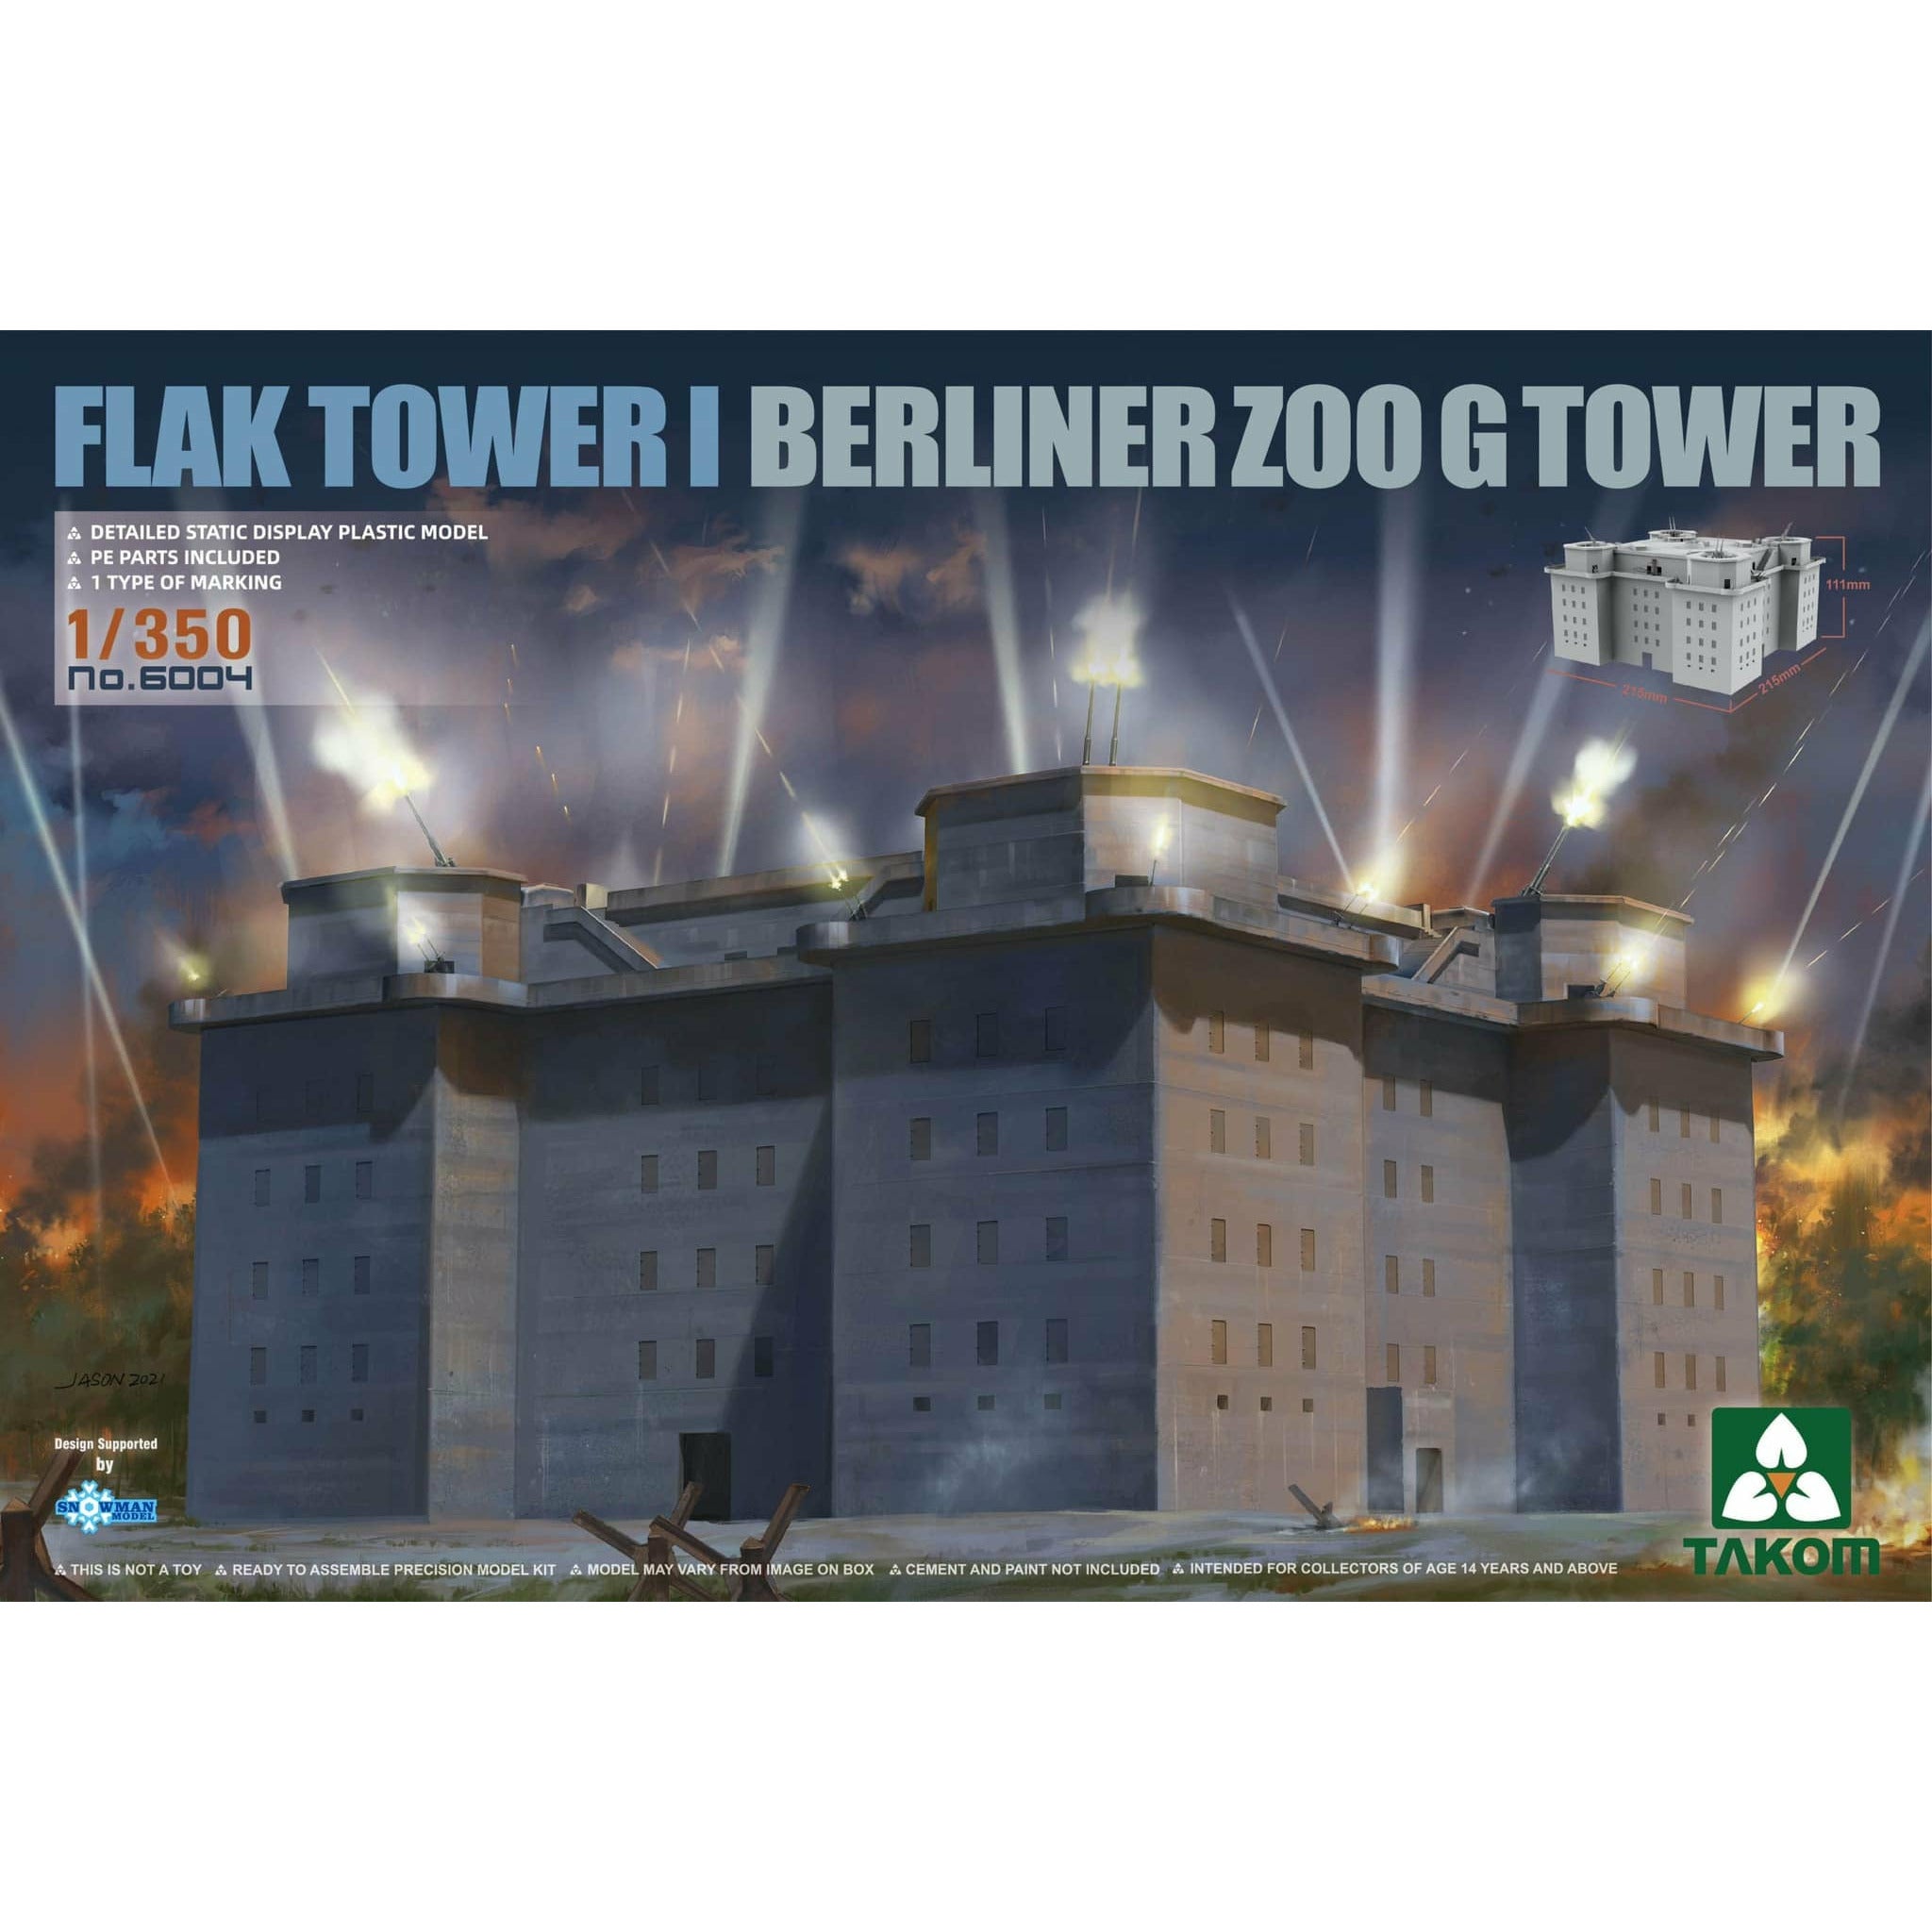 Flak Tower Iberliner Zoo G Tower #6004 1/350 Scenery Kit by Takom